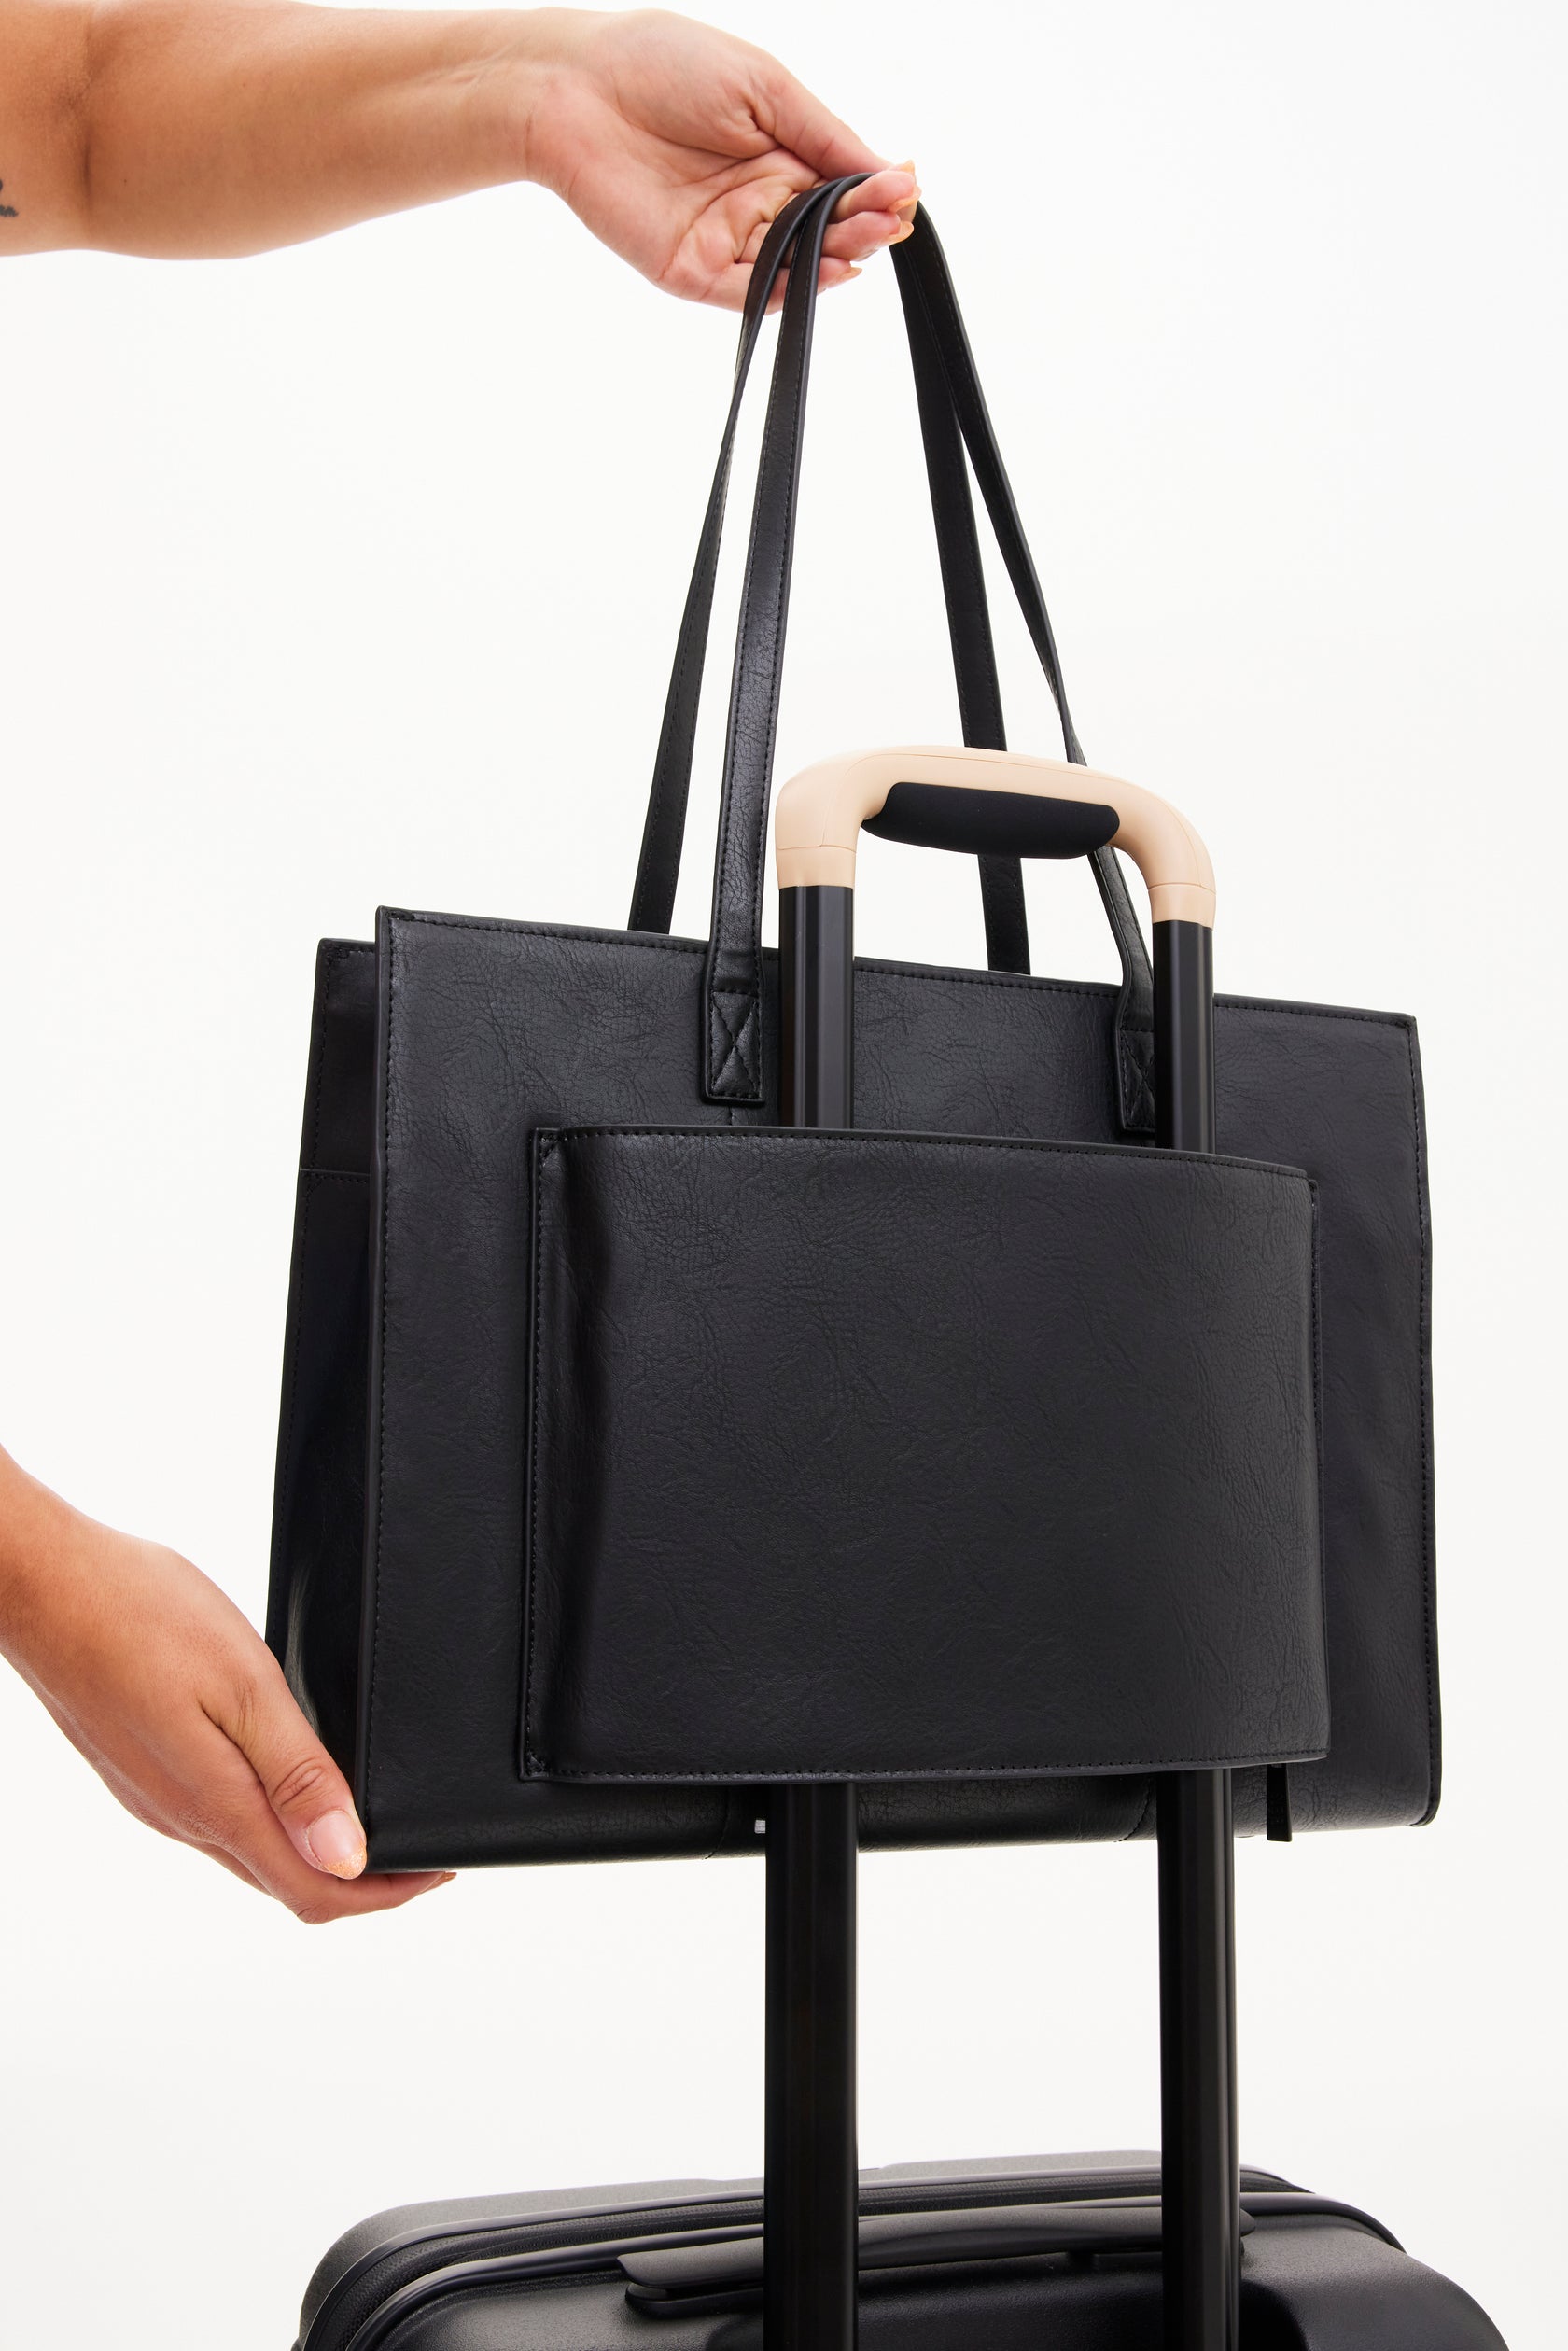 BÉIS 'The Work Tote' in Black - Black Work Bag For Women & Laptop Tote Bag